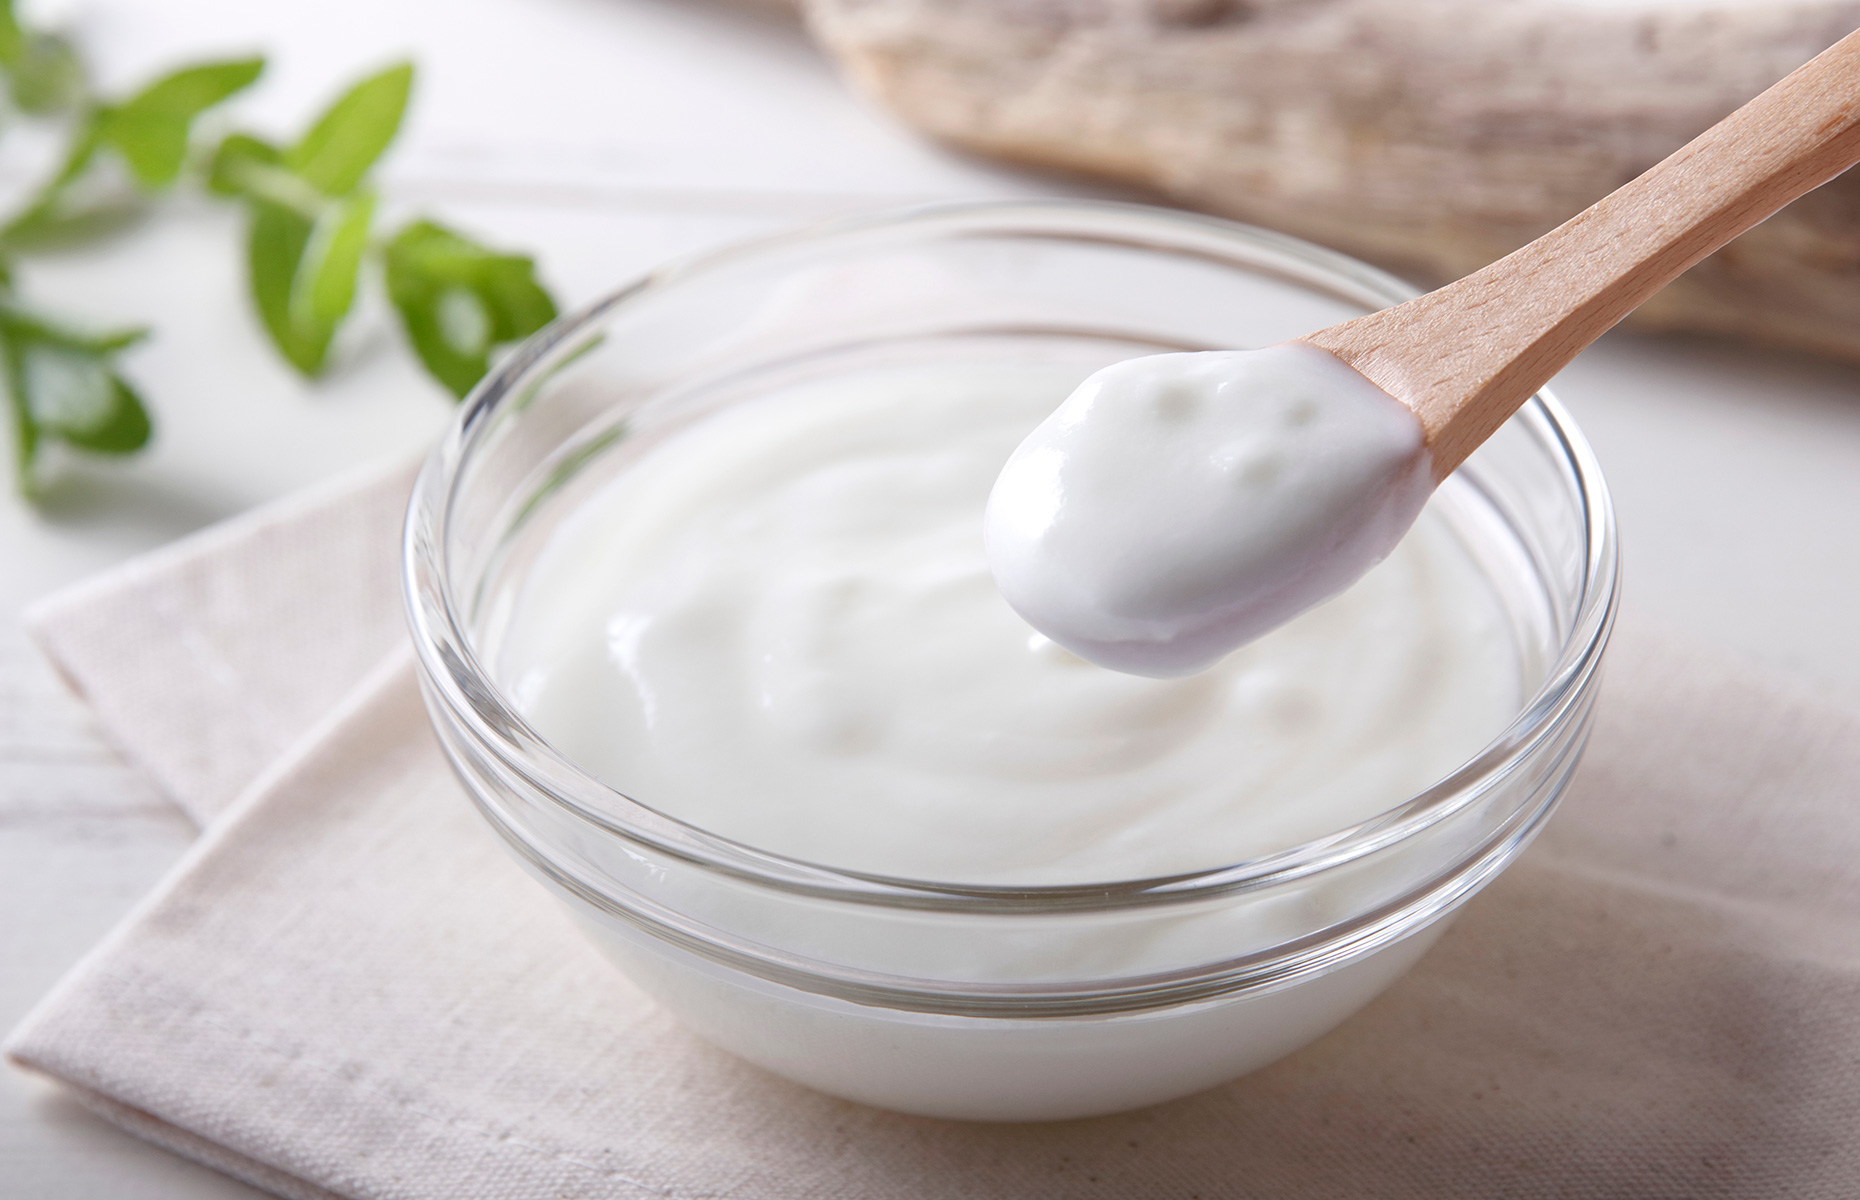 Bowl of yogurt (Image: NOBUHIRO ASADA/Shutterstock)